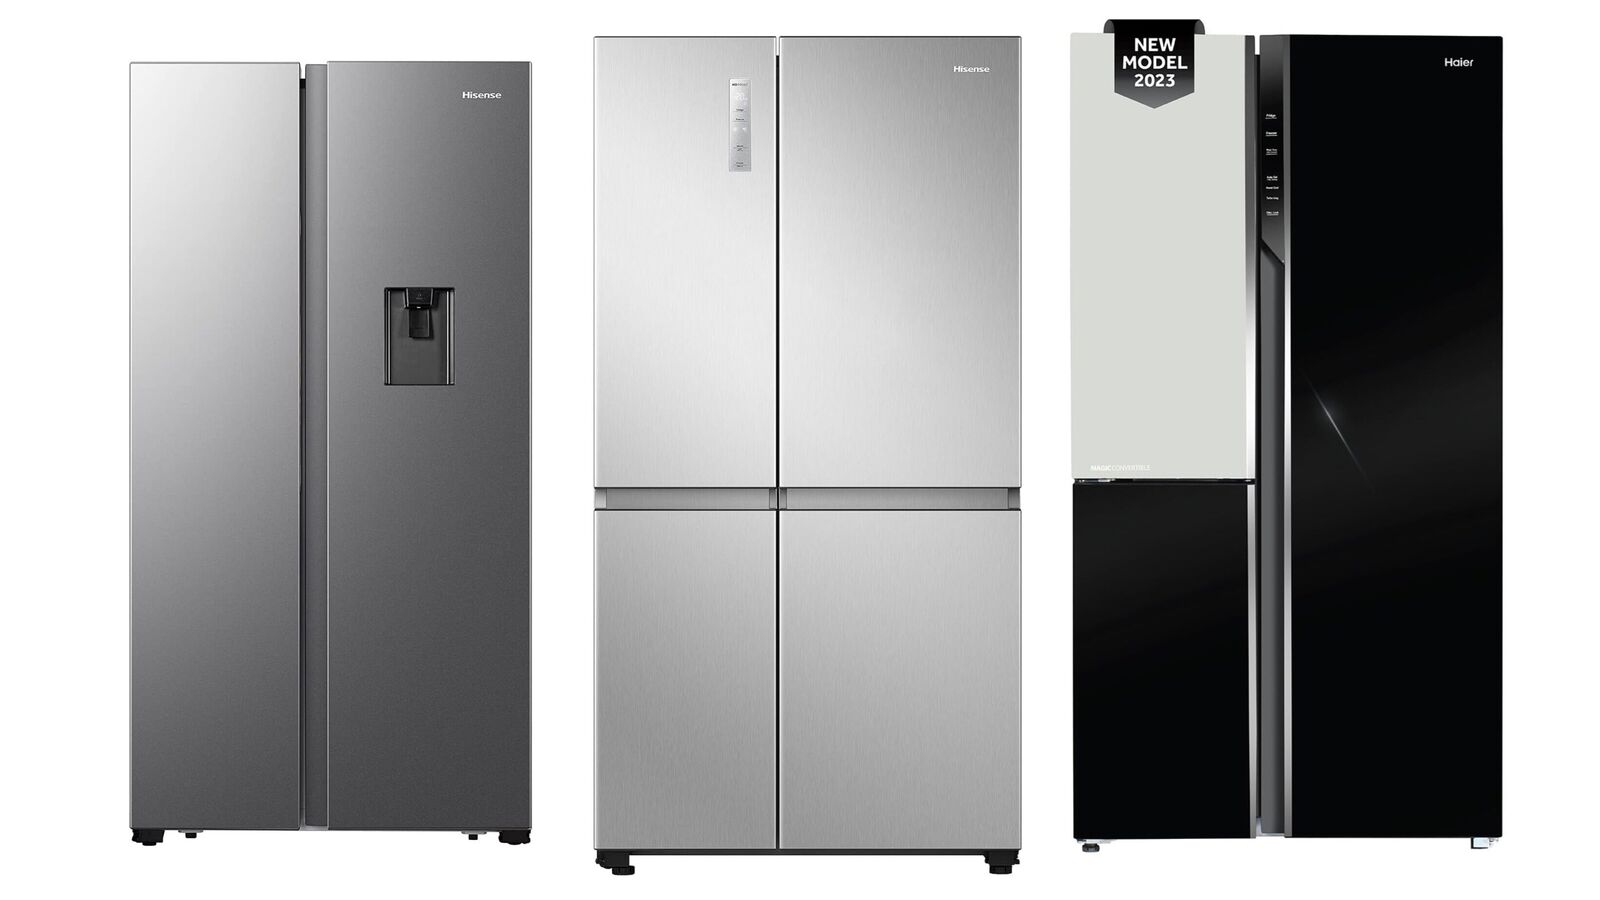 Flipkart Deals: Offers of up to 52% off on side-by-side refrigerators